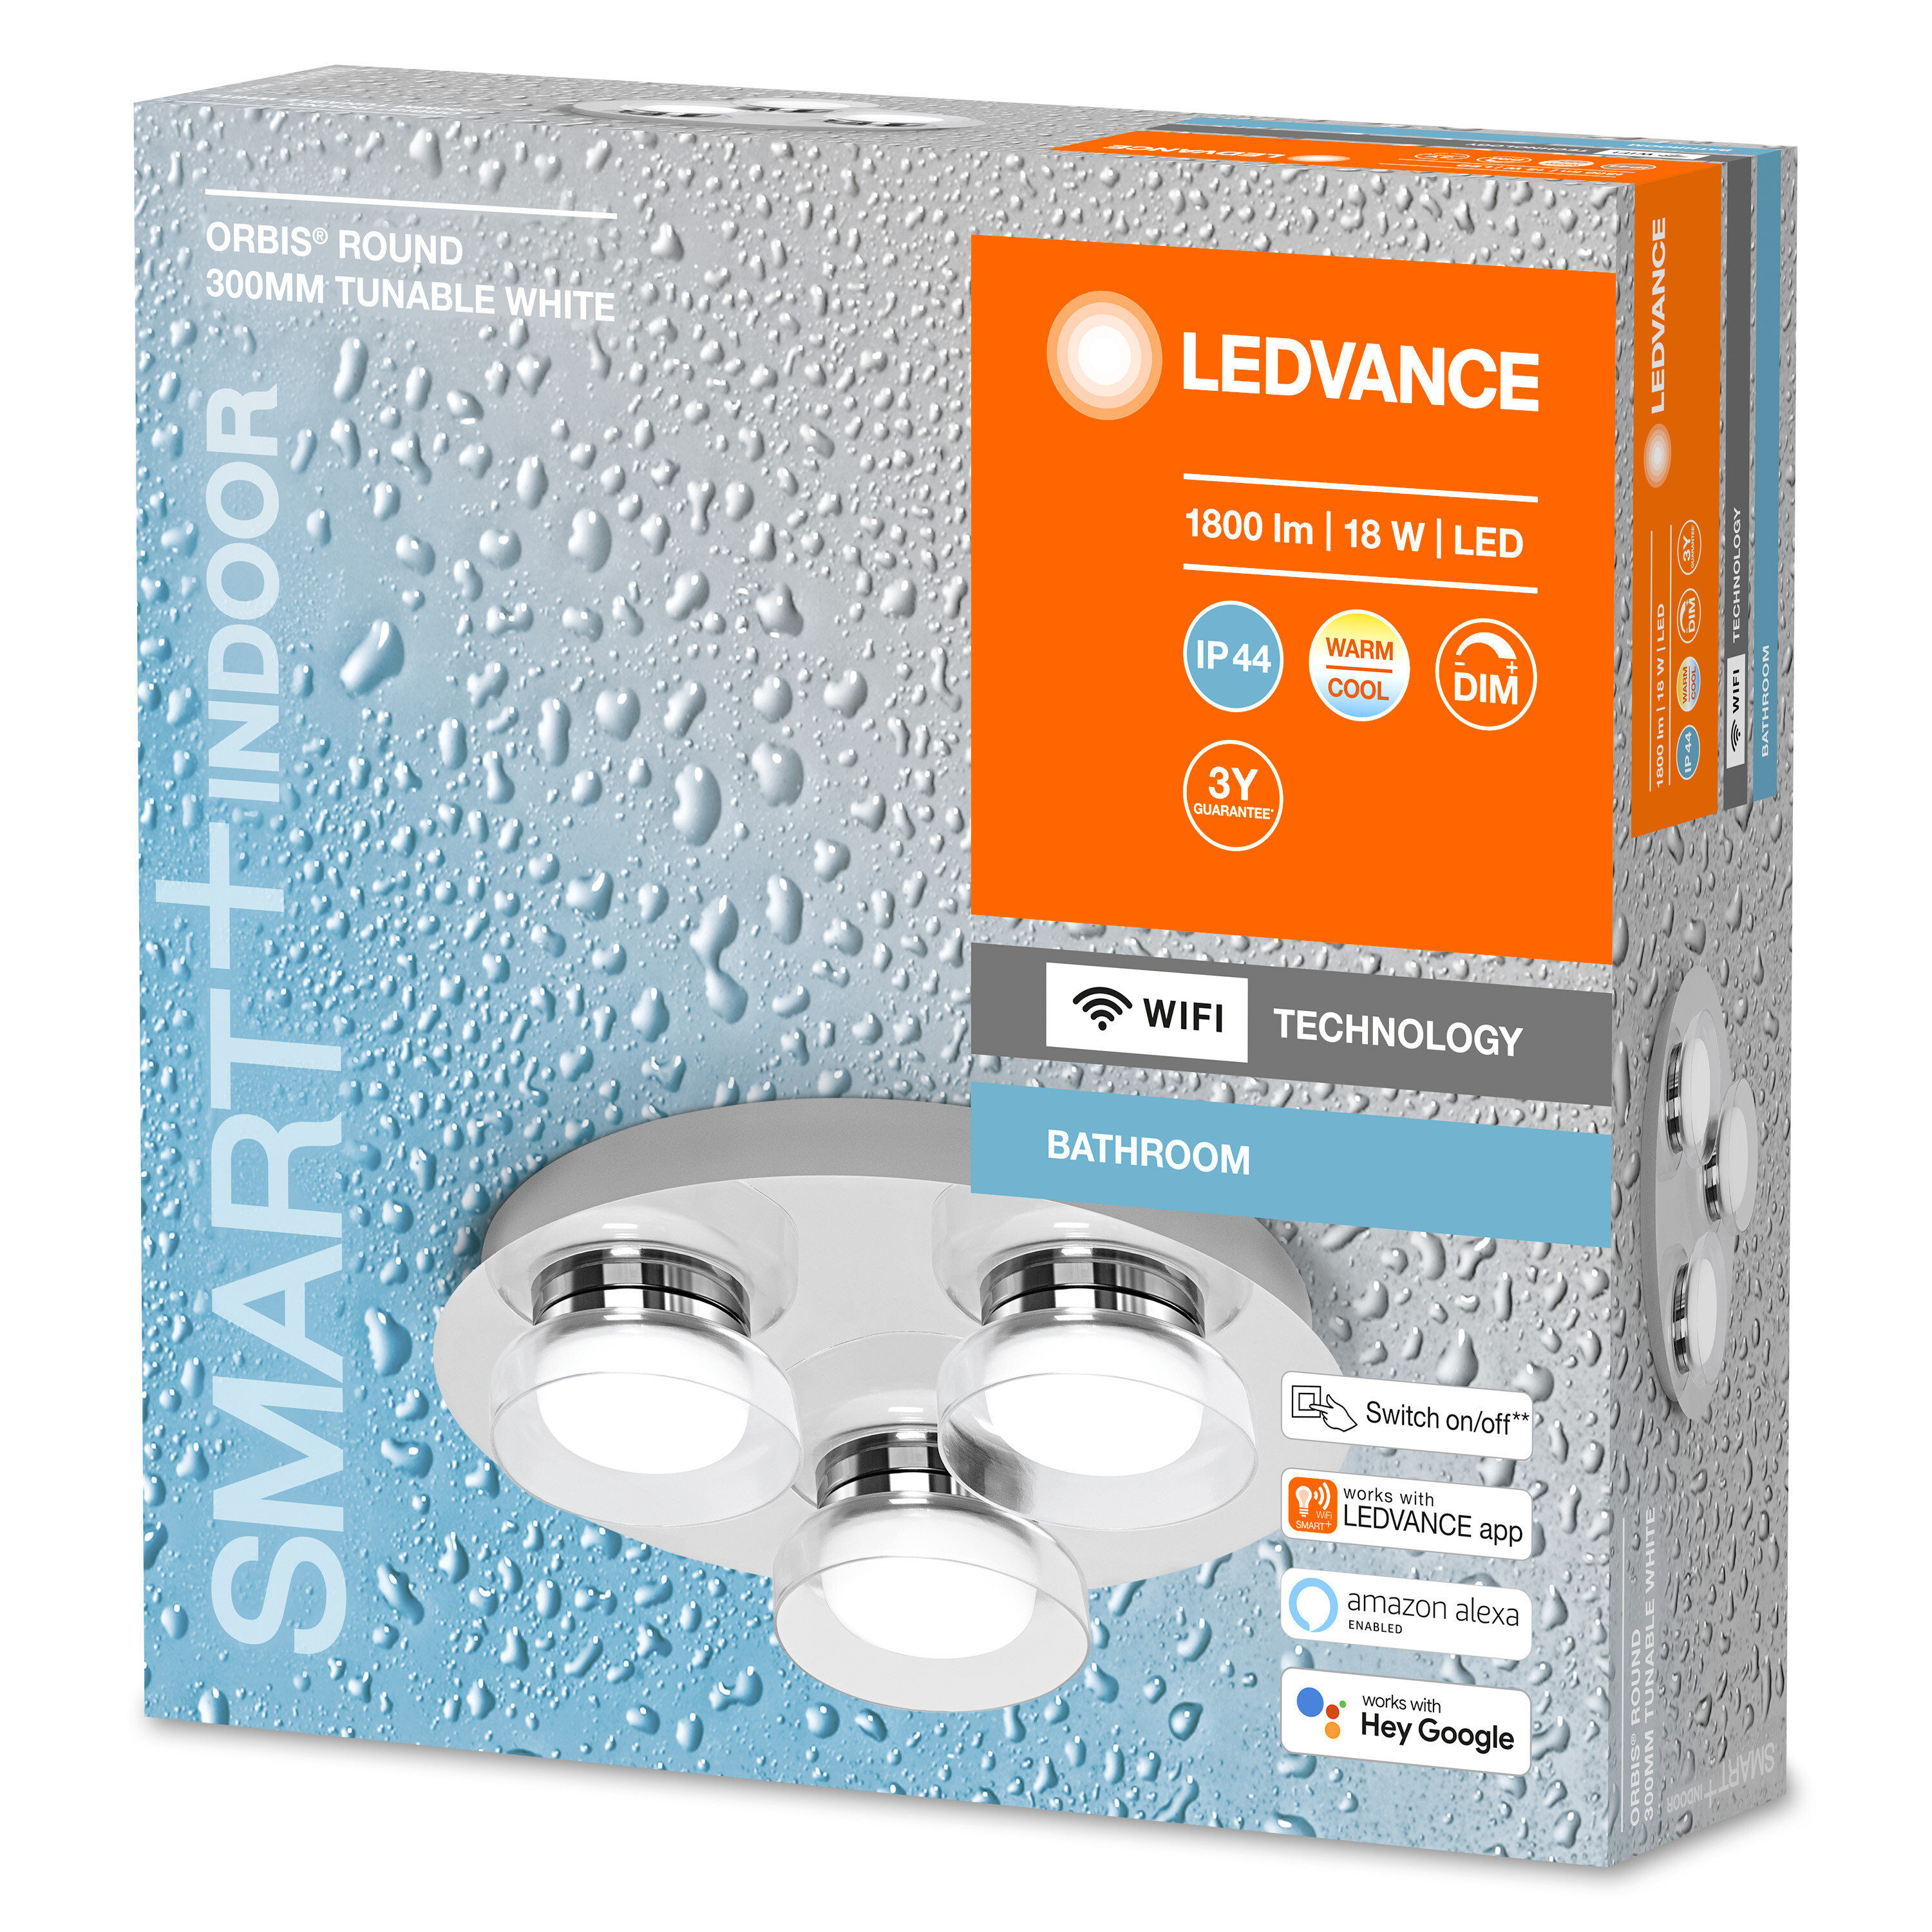 LEDVANCE BATHROOM DECORATIVE CEILING AND Lichfarbe WITH WIFI änderbar Badezimmerbeleuchtung WALL TECHNOLOGY